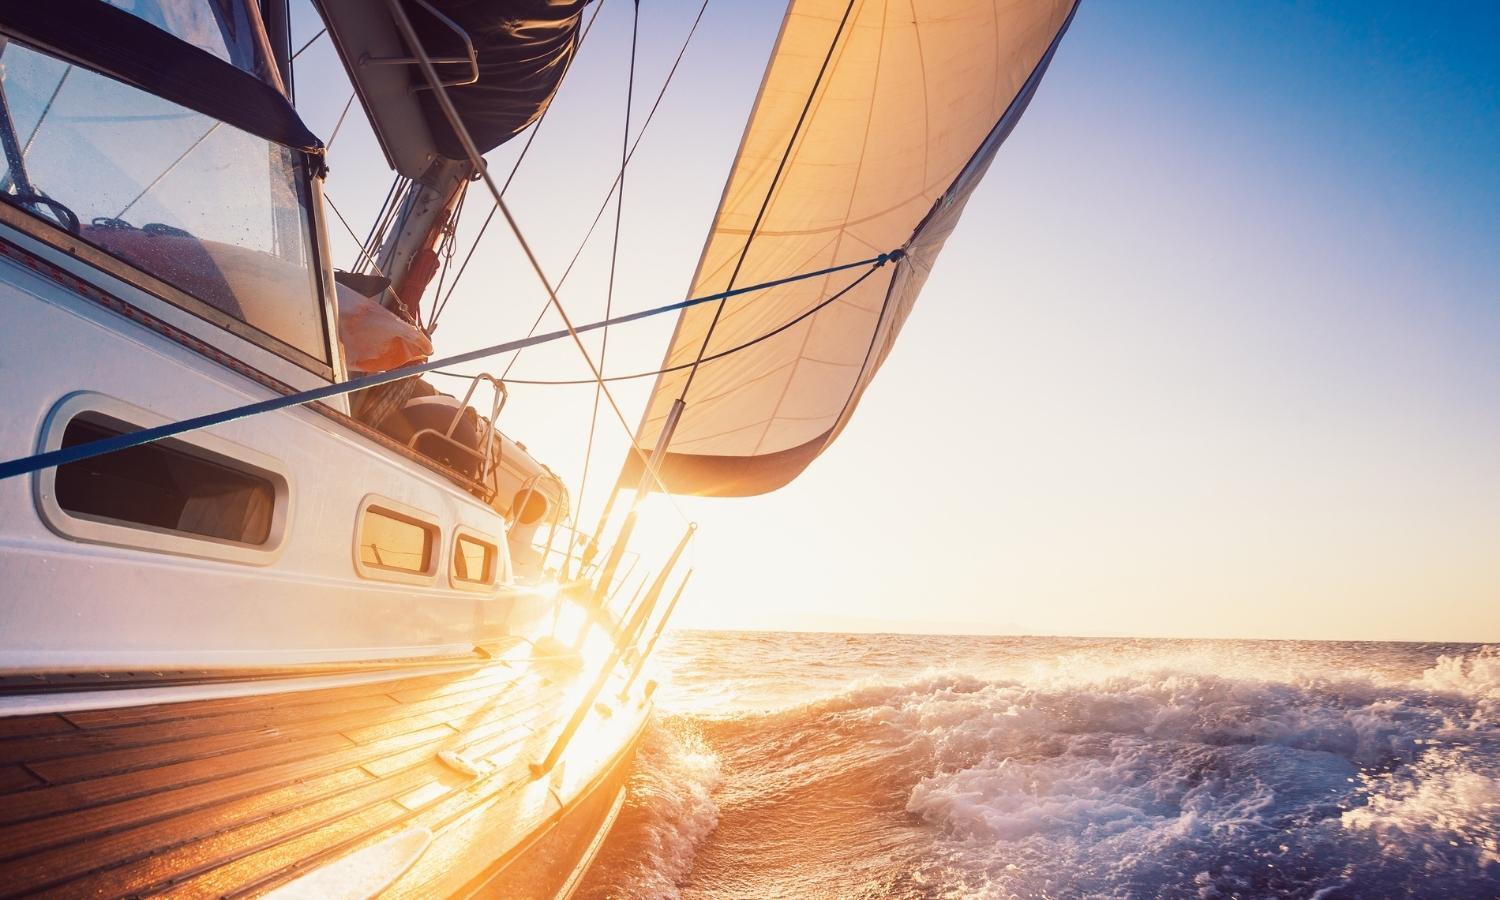 Sailing Can Help Improve Mental Health